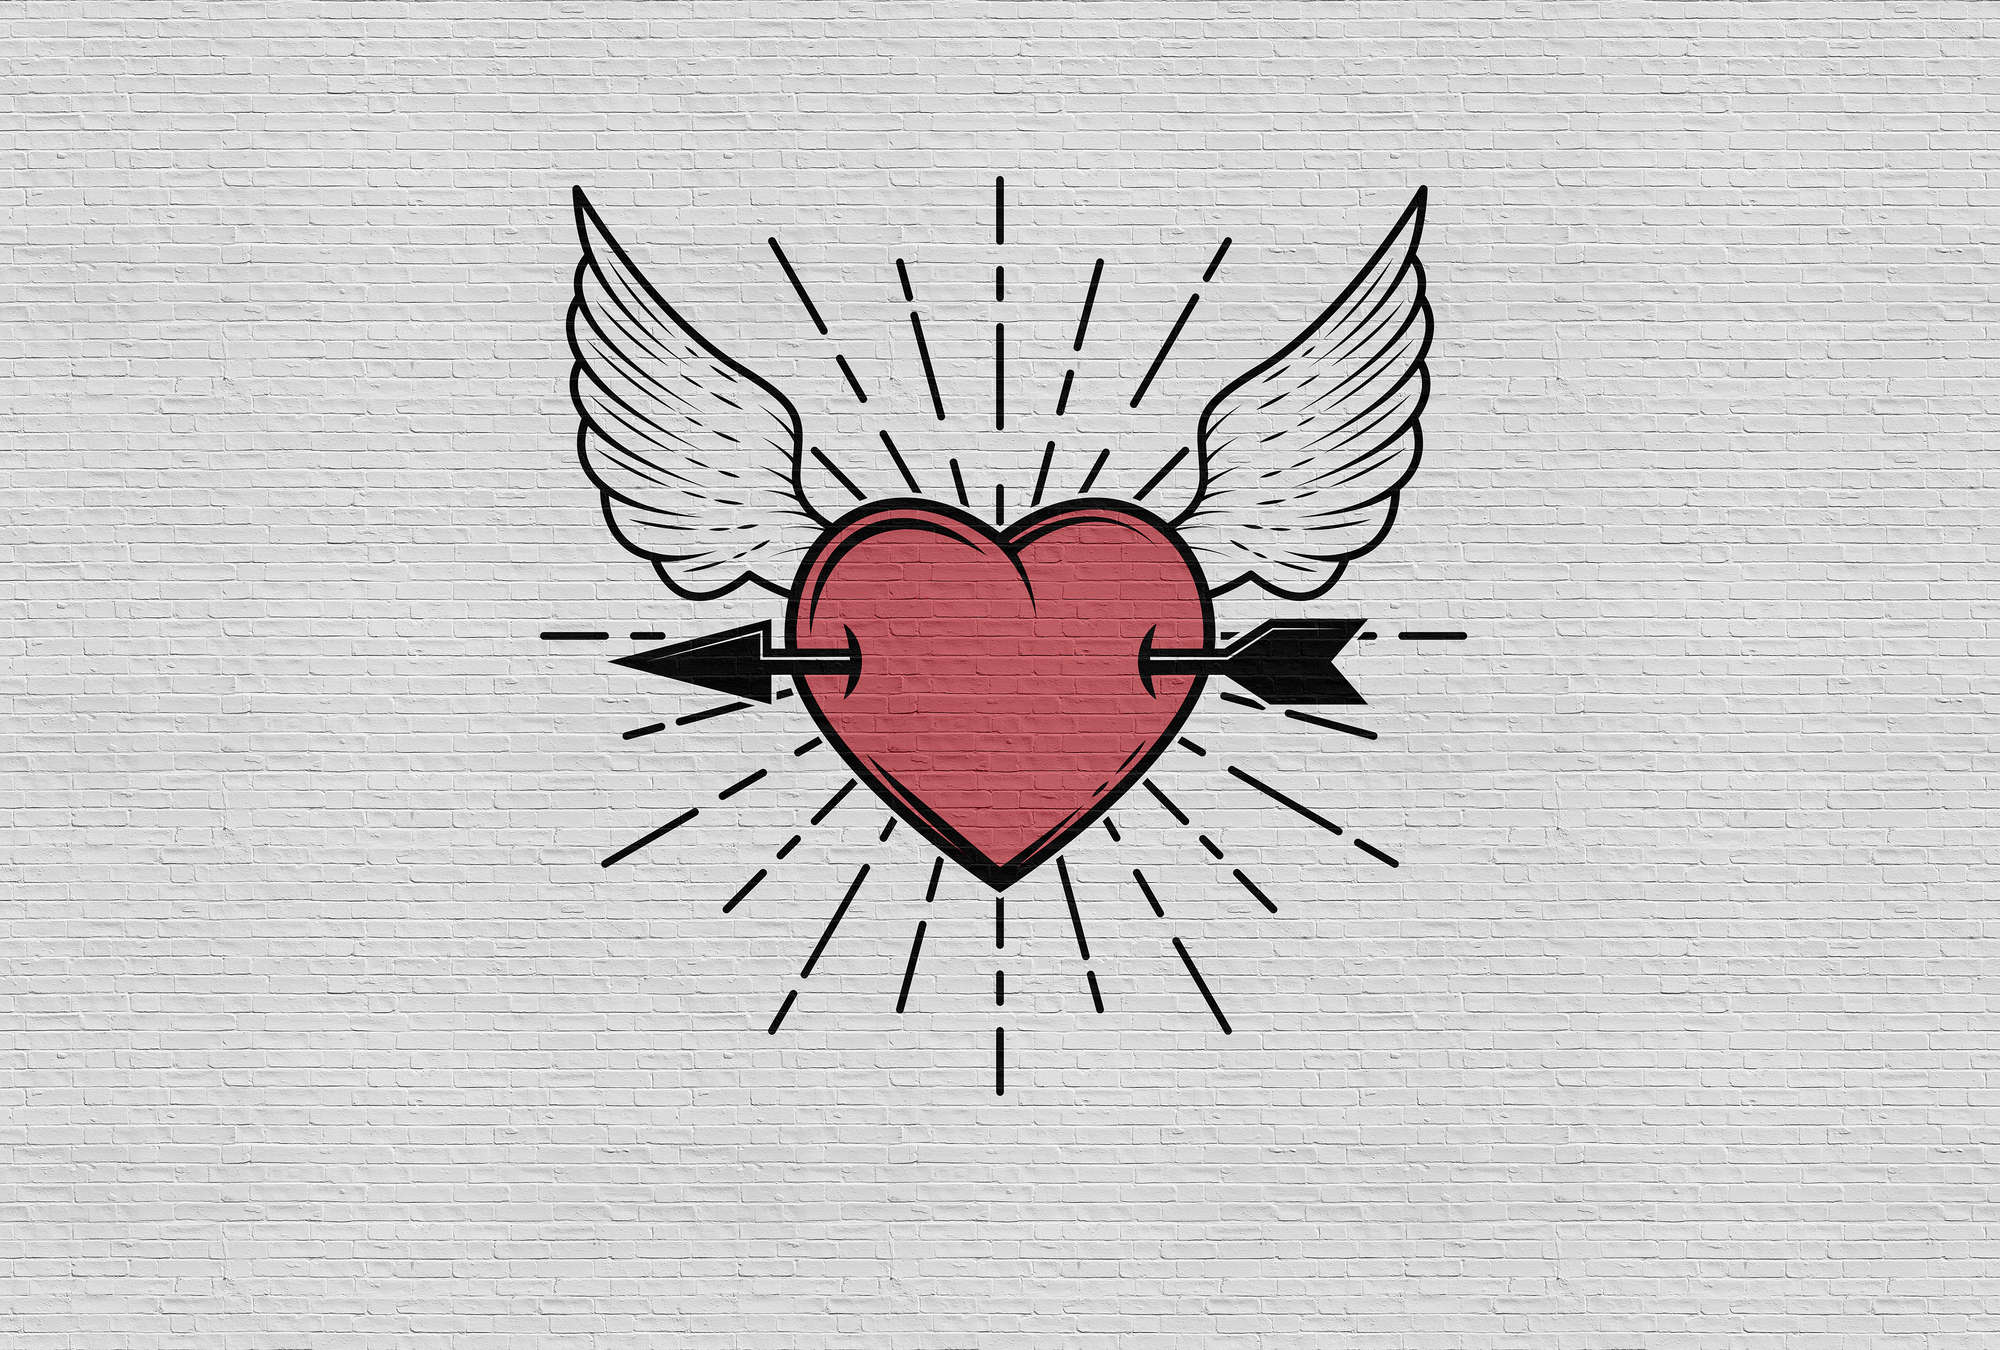             Tattoo you 1 - Rockabilly stijl fotobehang, hart motief - grijs, rood | parelmoer glad vlies
        